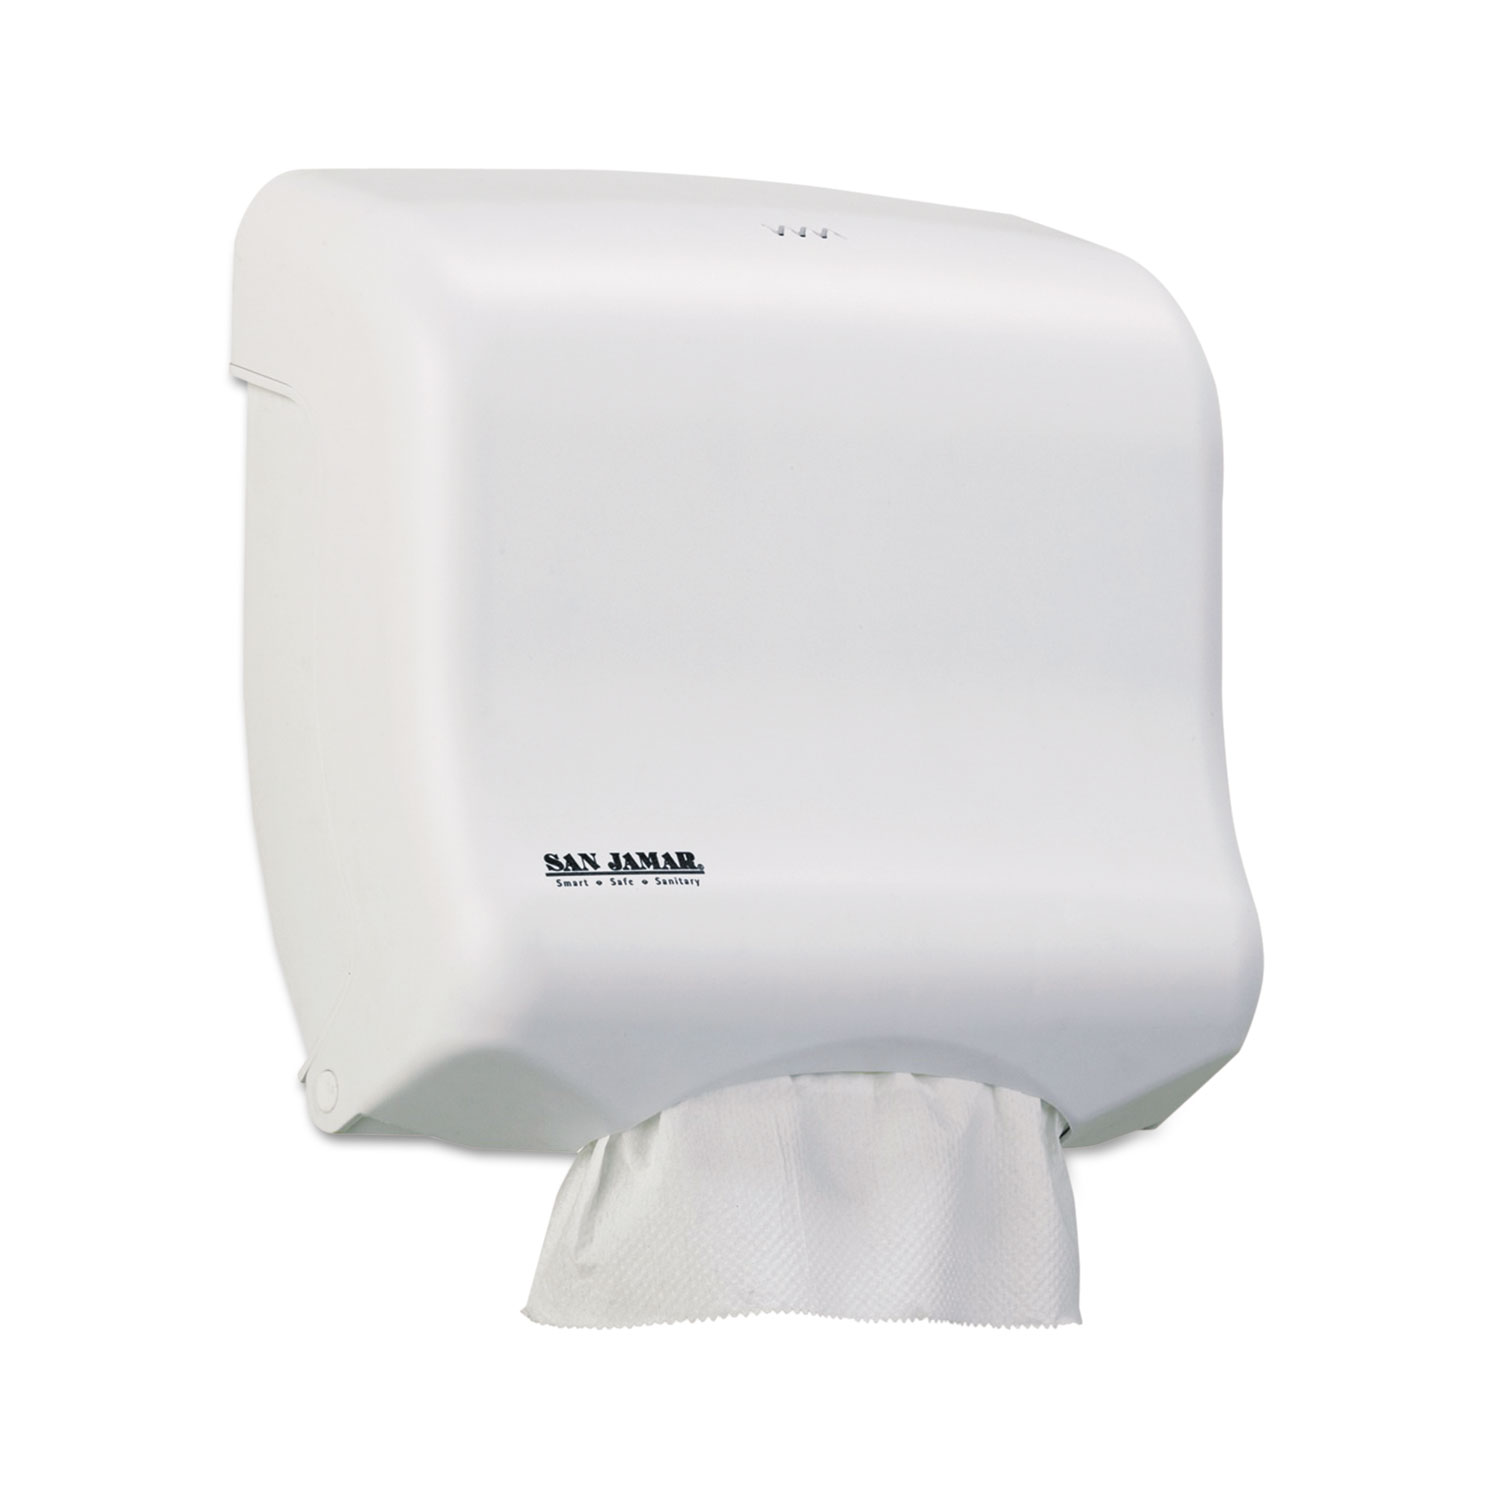 Ultrafold Towel Dispenser for C-Fold/Multifold Towels, 11.5 x 6x 11.5, White